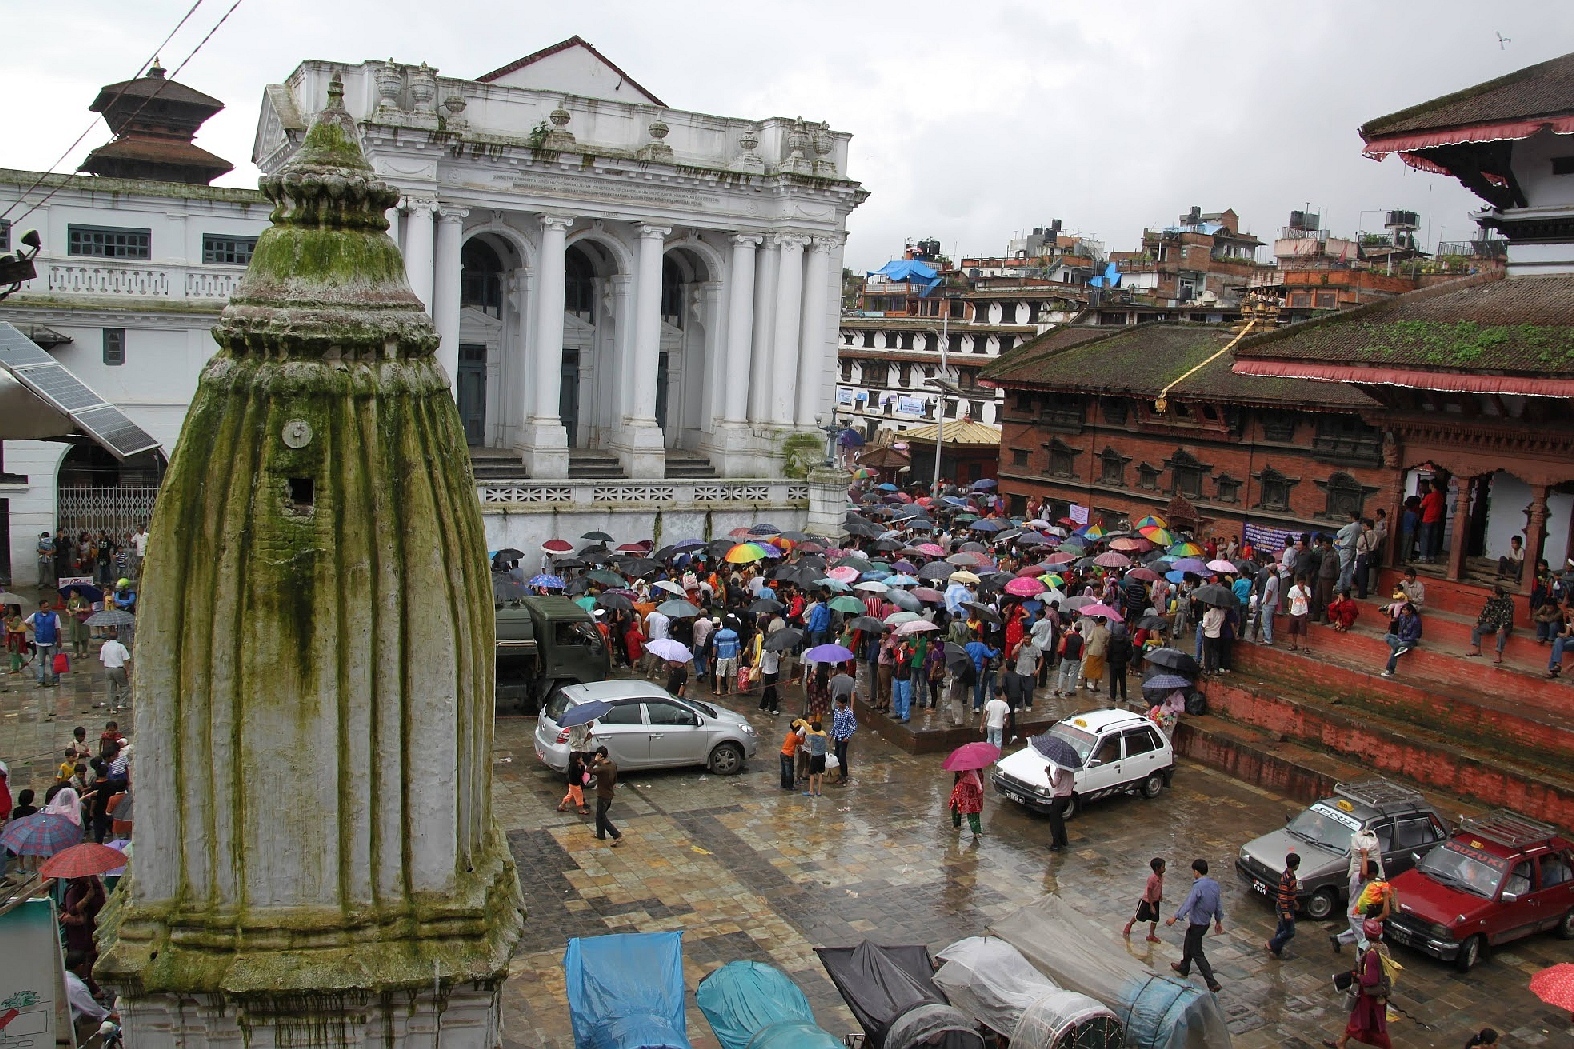 Katmandou-Durbar-Square-Nepal